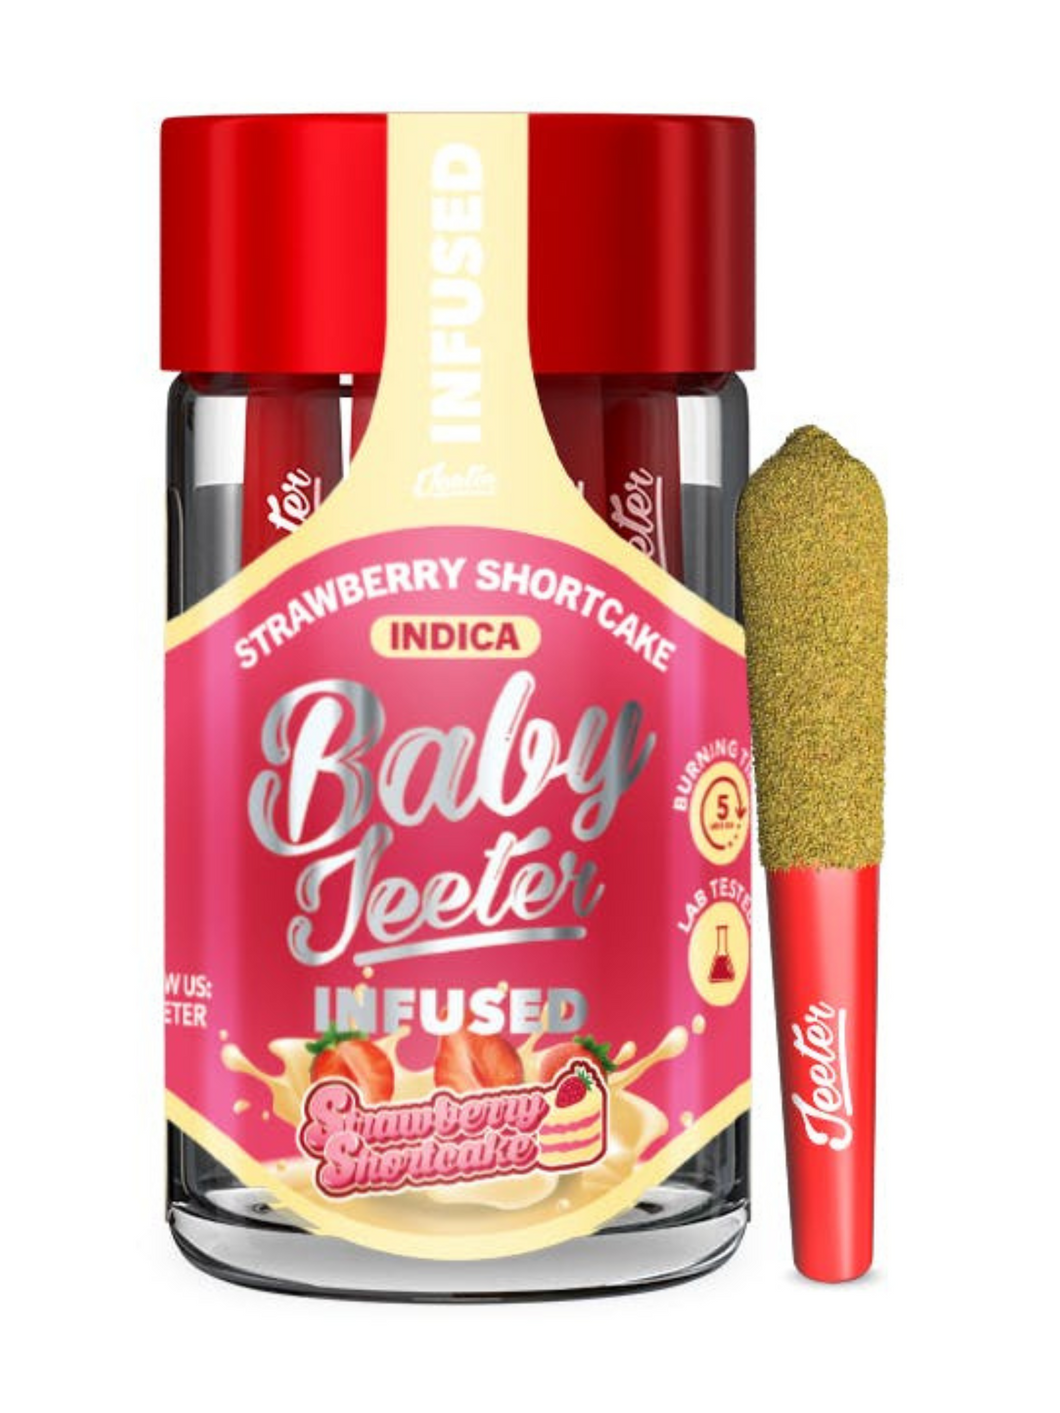 Baby Jeeter Infused - Strawberry Shortcake (I)